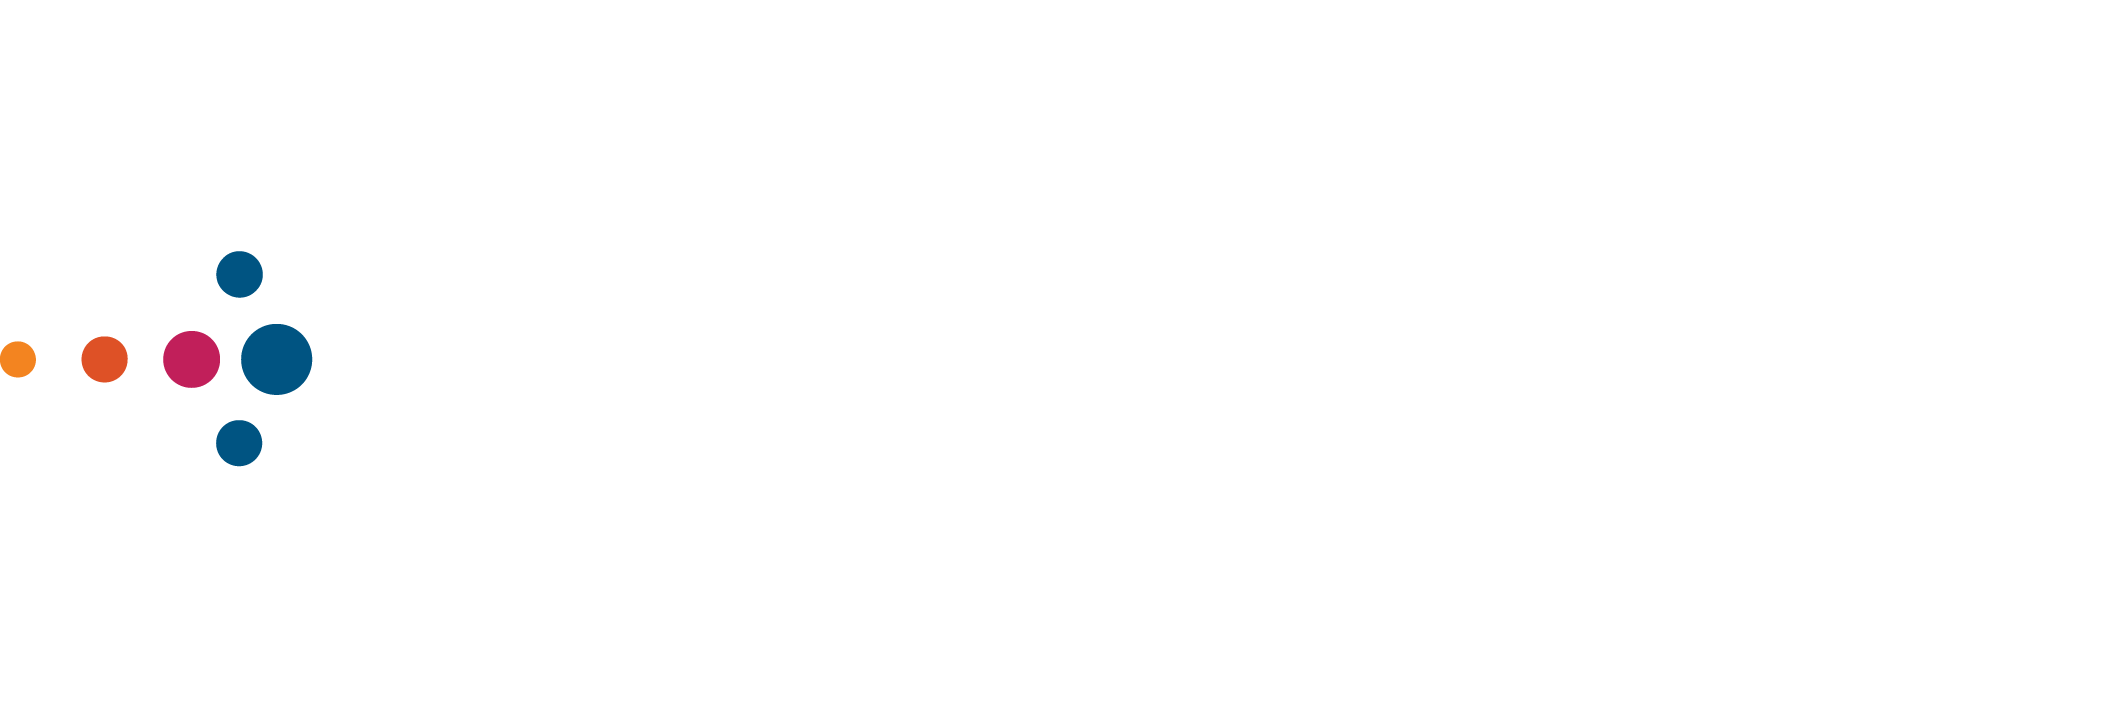 GP Strategies Logo